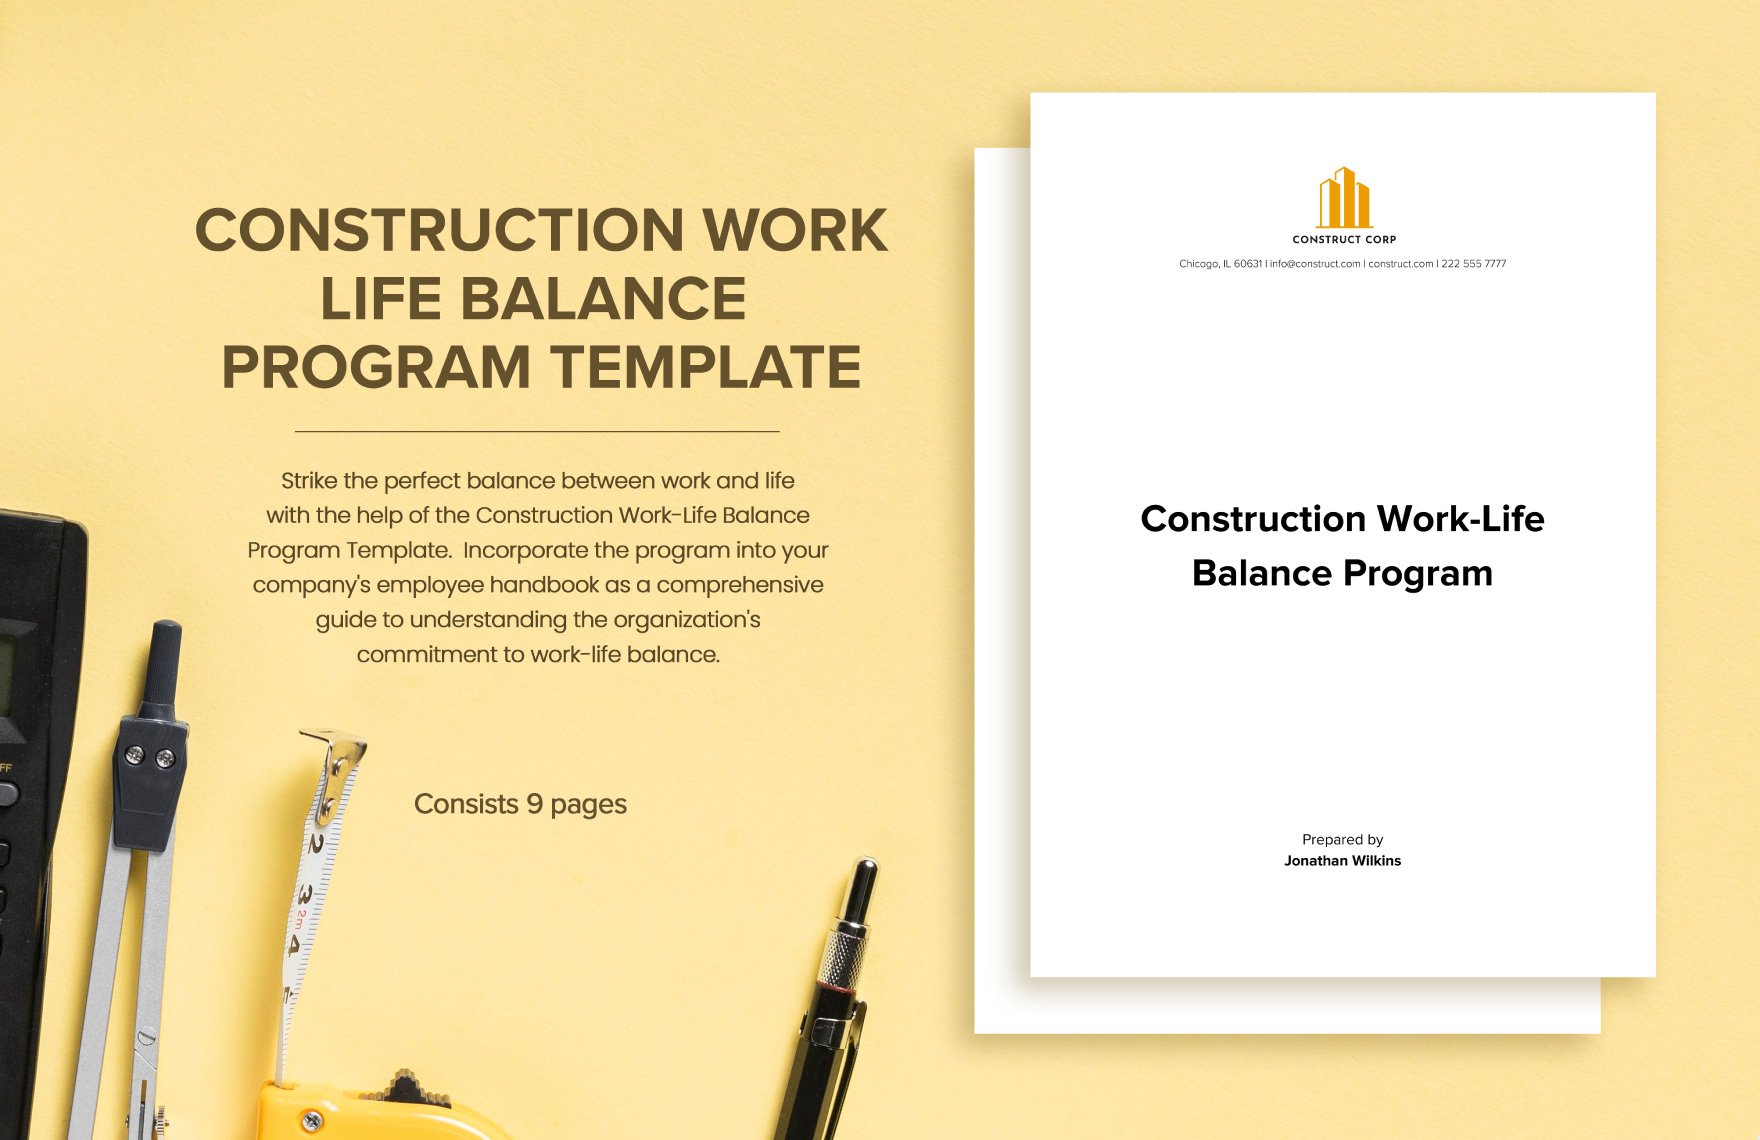 Construction Work-Life Balance Program Template